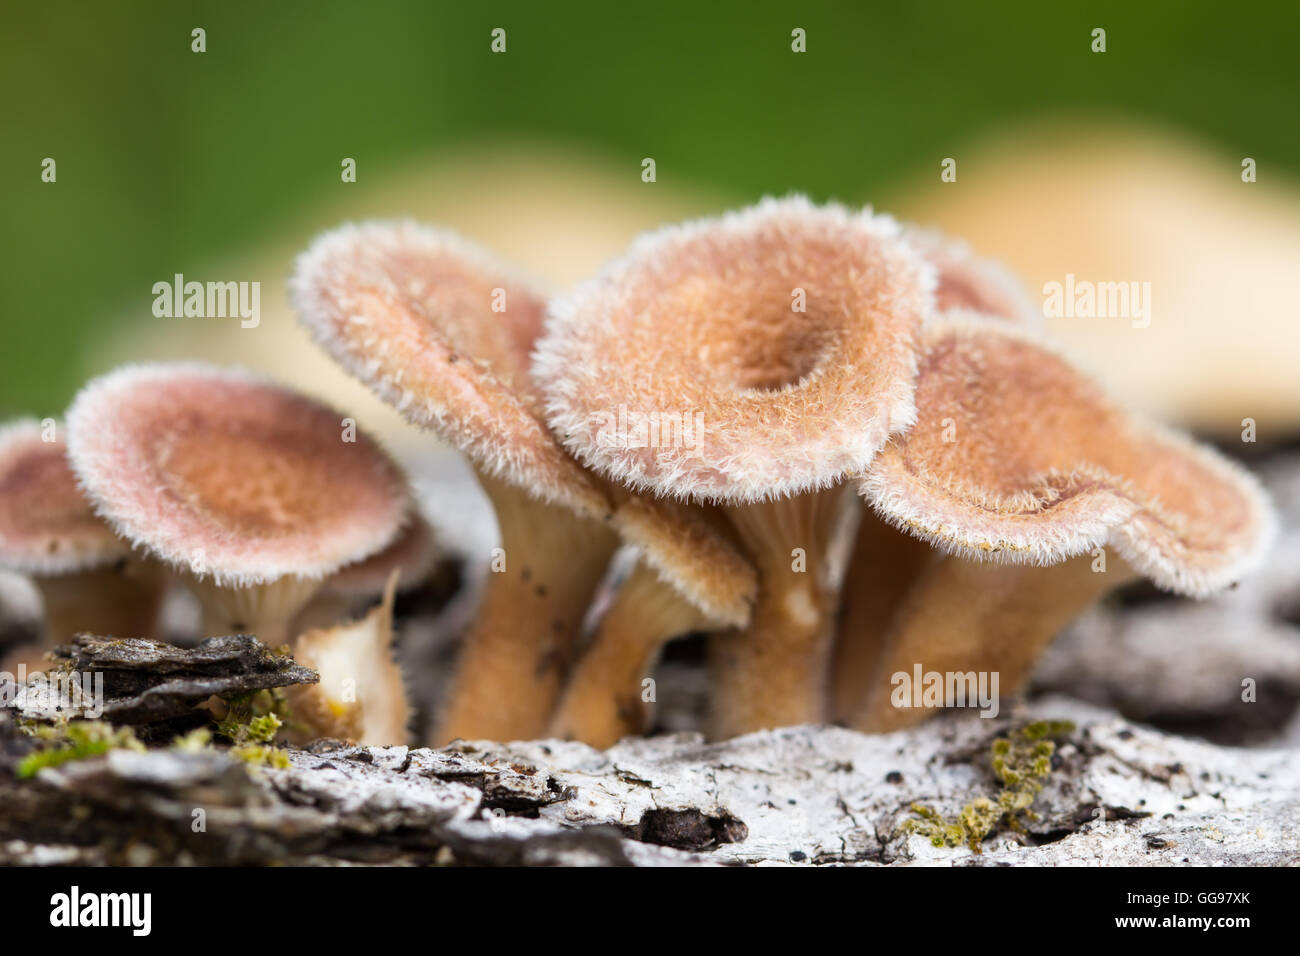 Cluster of young hairy mushroom fungi on fallen hardwood log. Likely Lentinus crinitus aka fringed Sawgill mushroom. Stock Photo